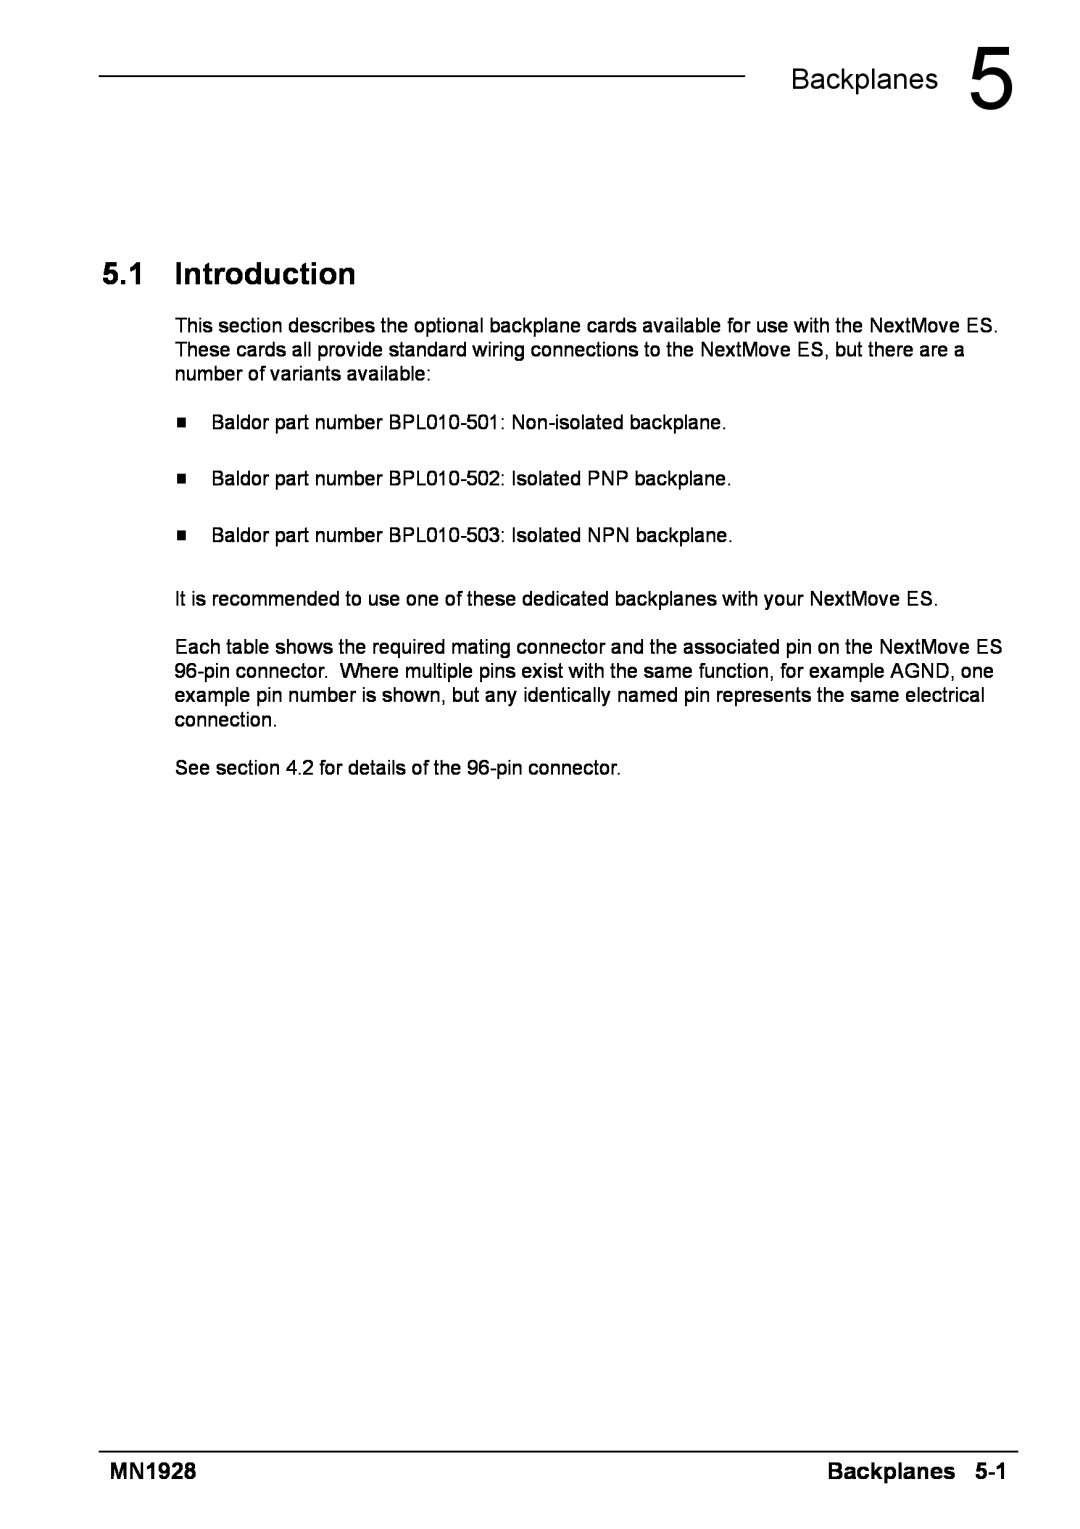 Baldor MN1928 installation manual Introduction, Backplanes 